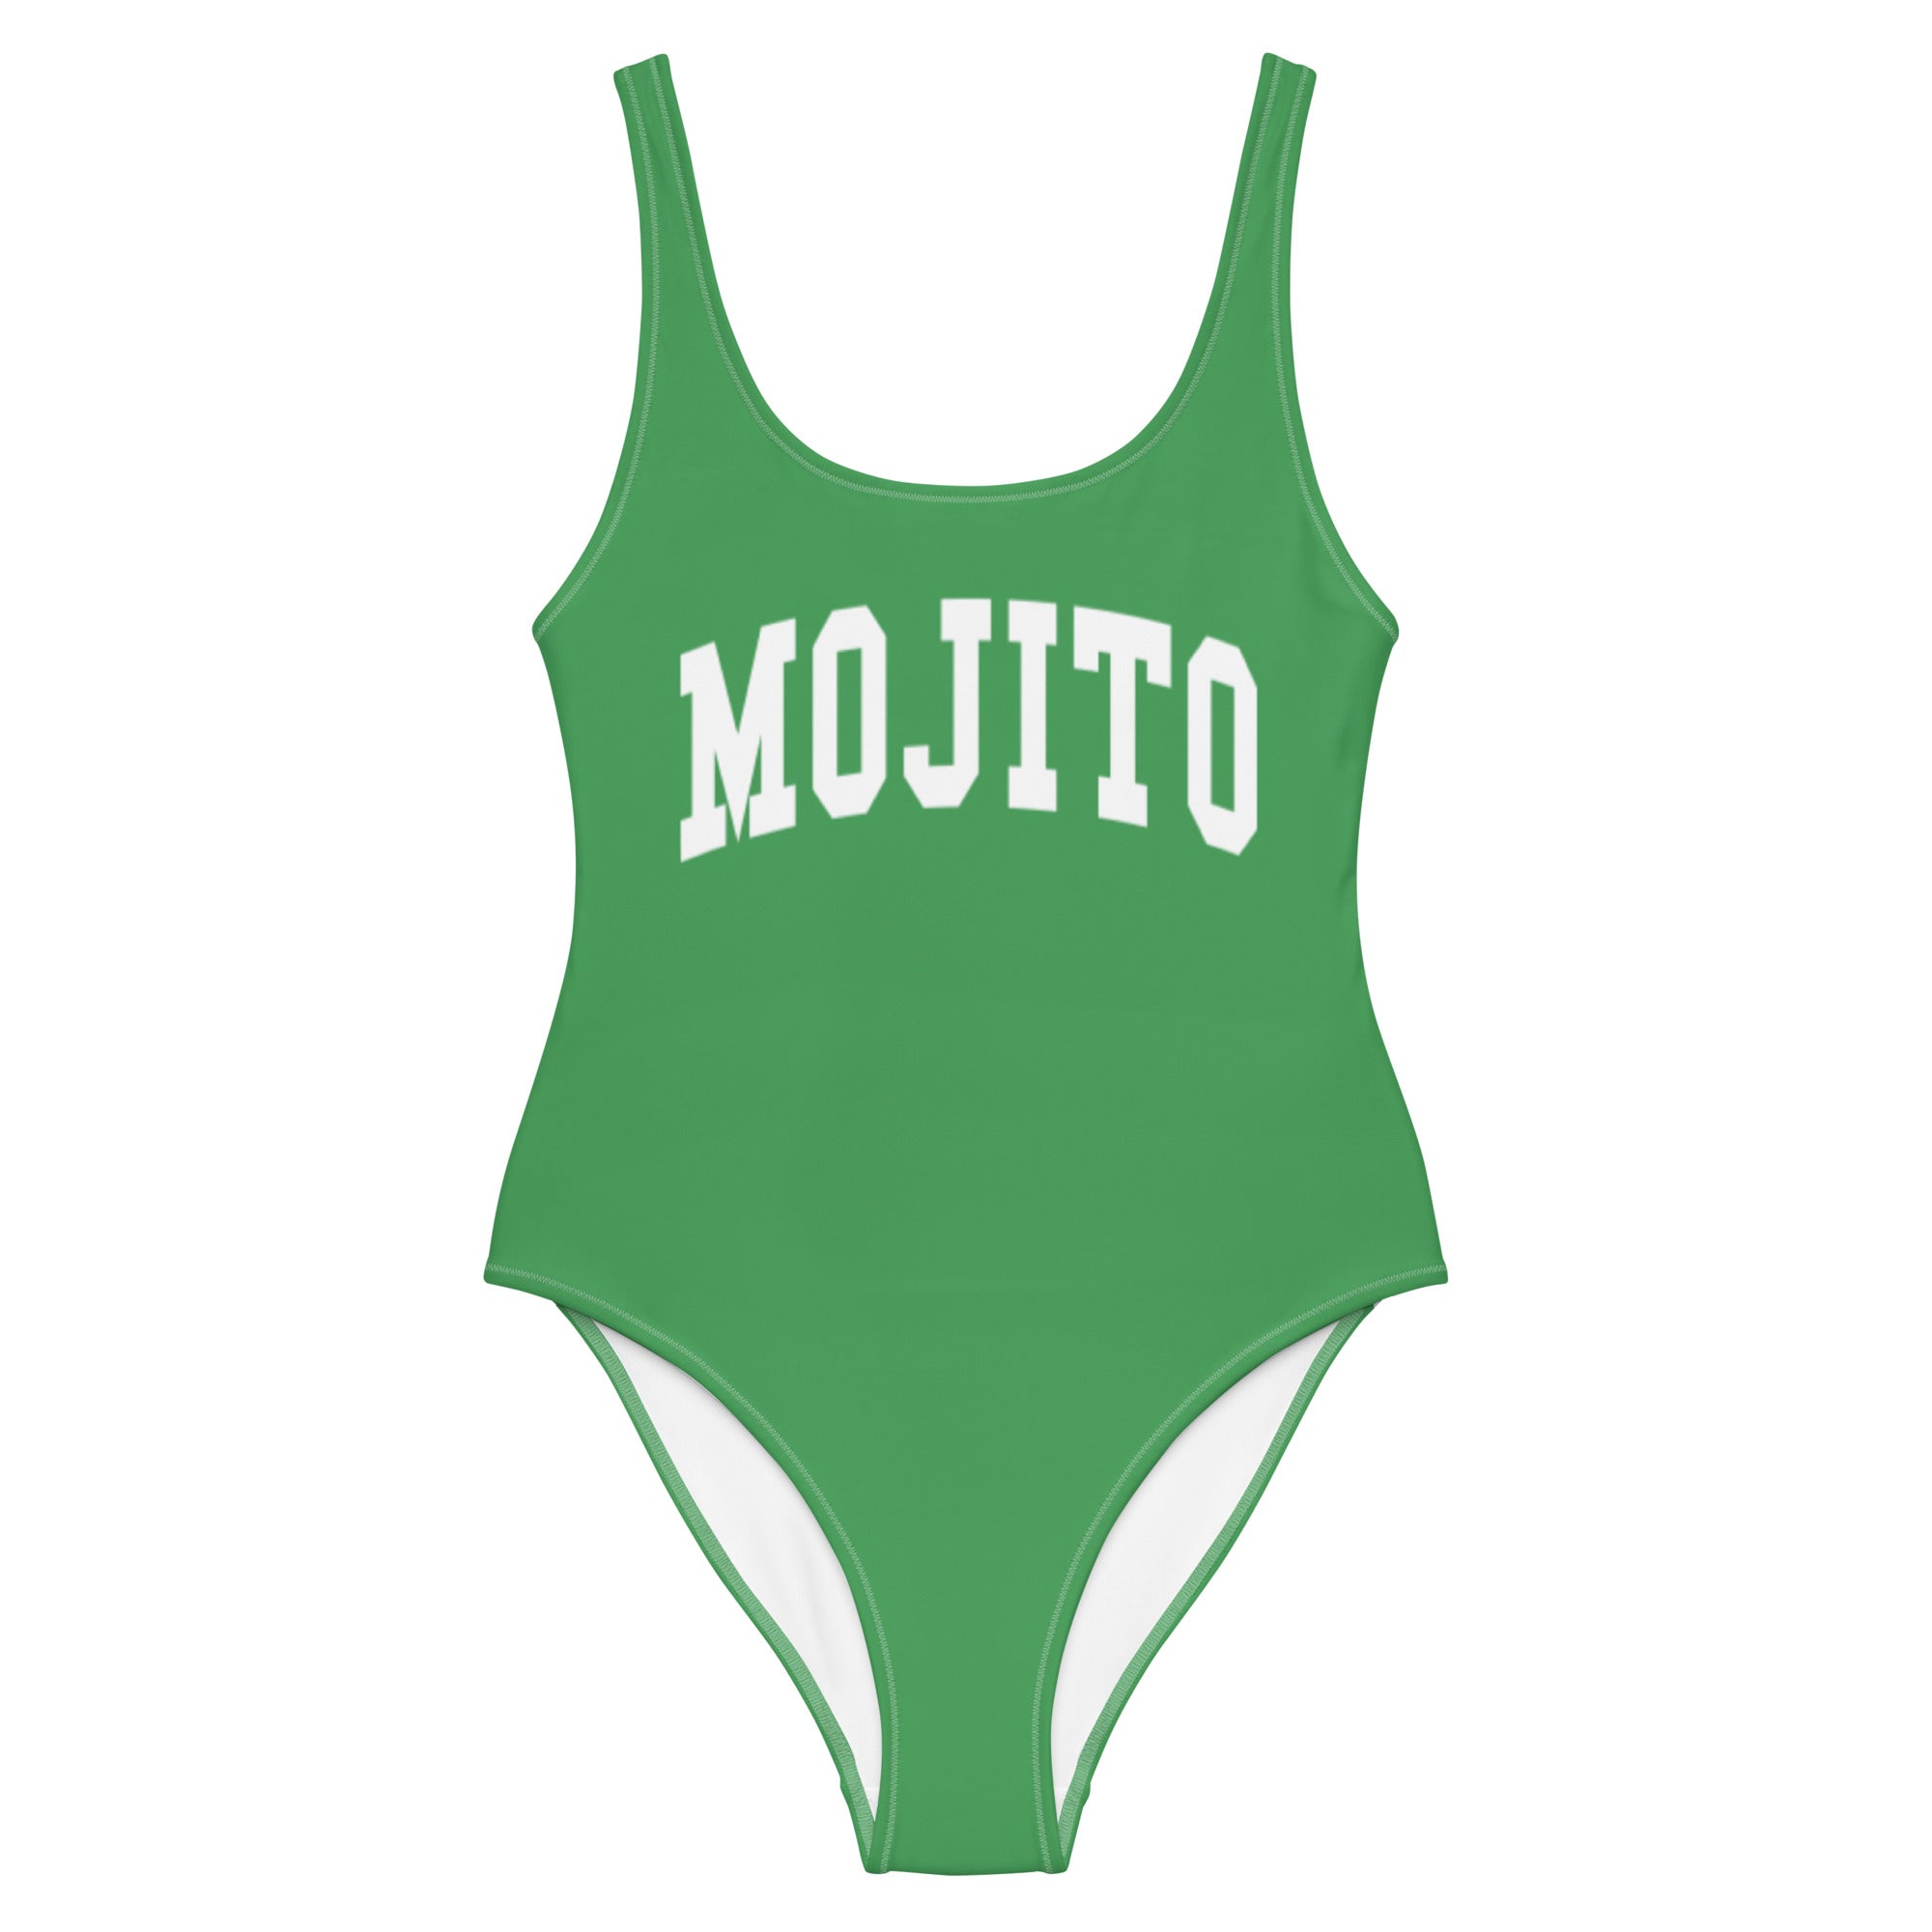 Mojito - Swimsuit - The Refined Spirit